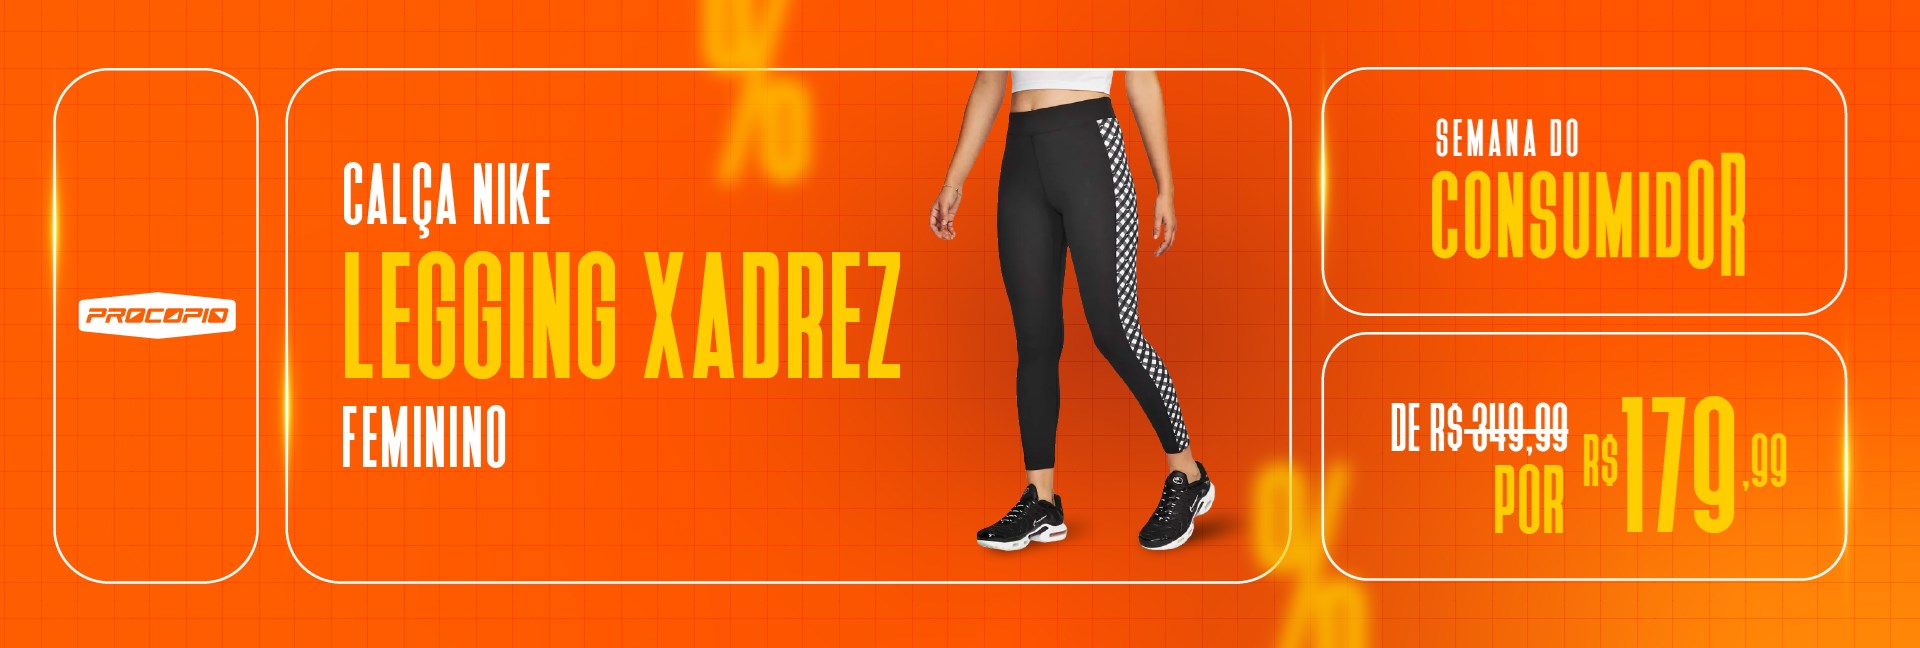 Calça Nike Legging Xadrez